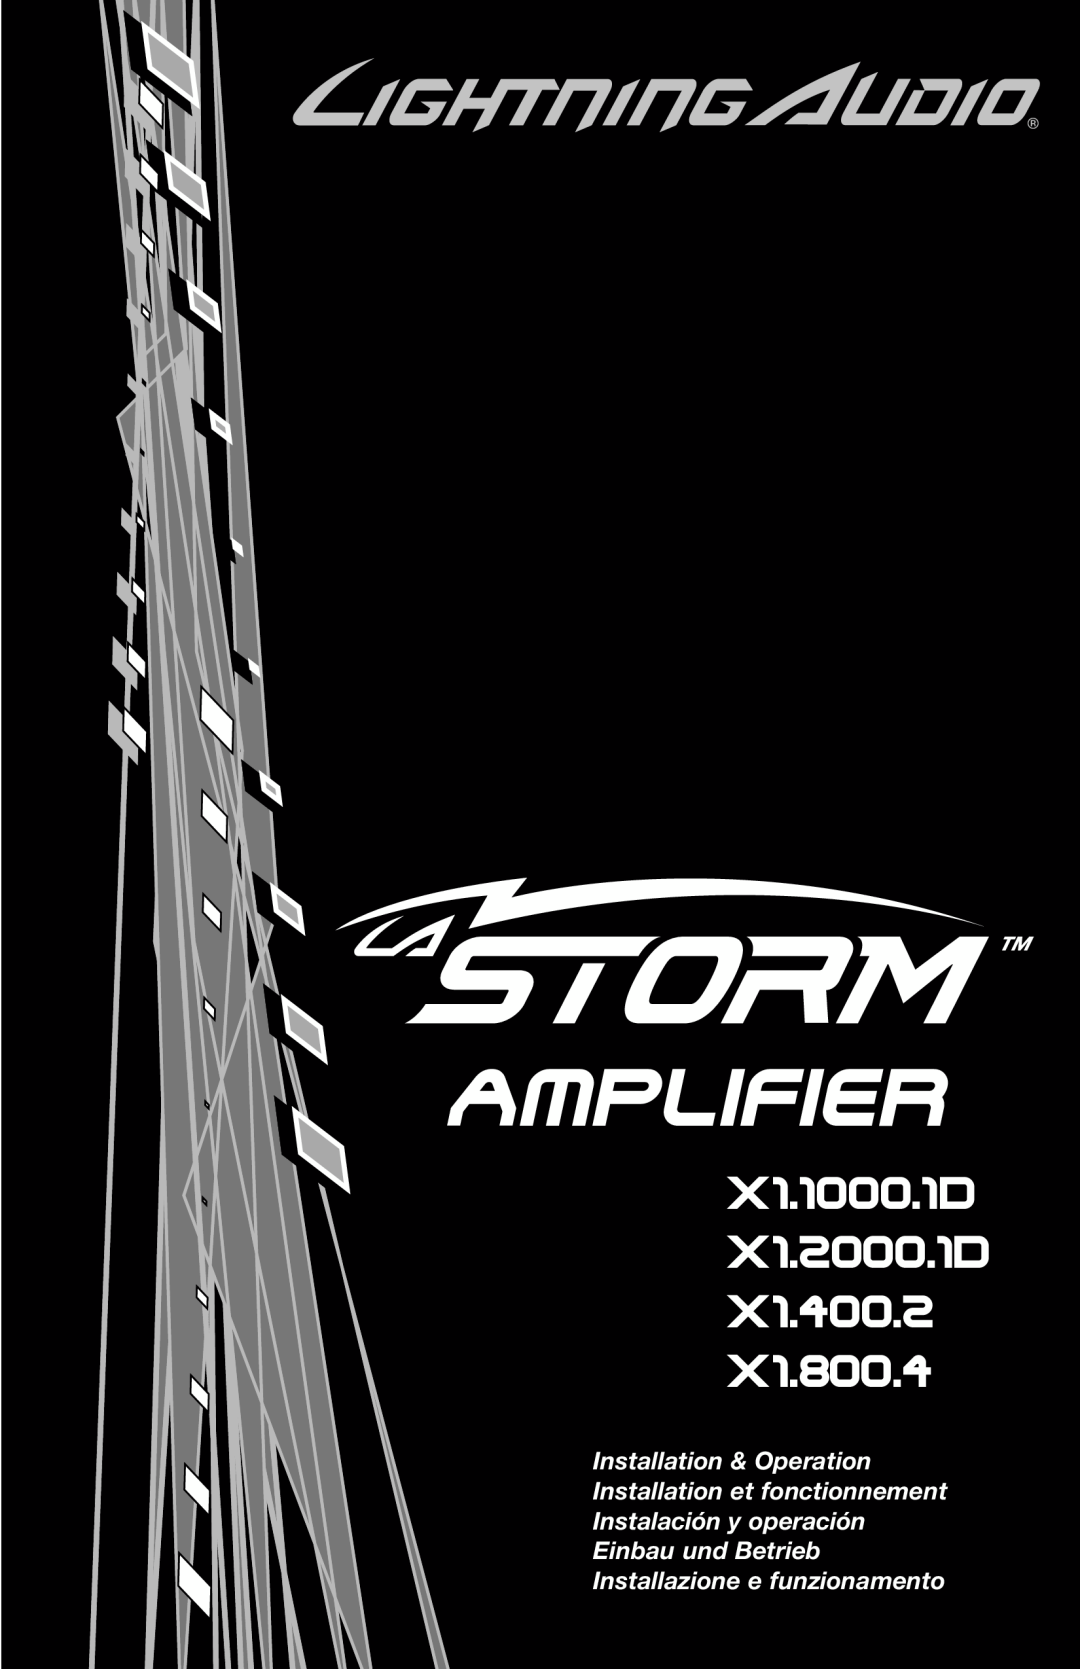 Lightning Audio manual Amplifier, X1.1000.1D X1.2000.1D X1.400.2 X1.800.4, Installation & Operation 